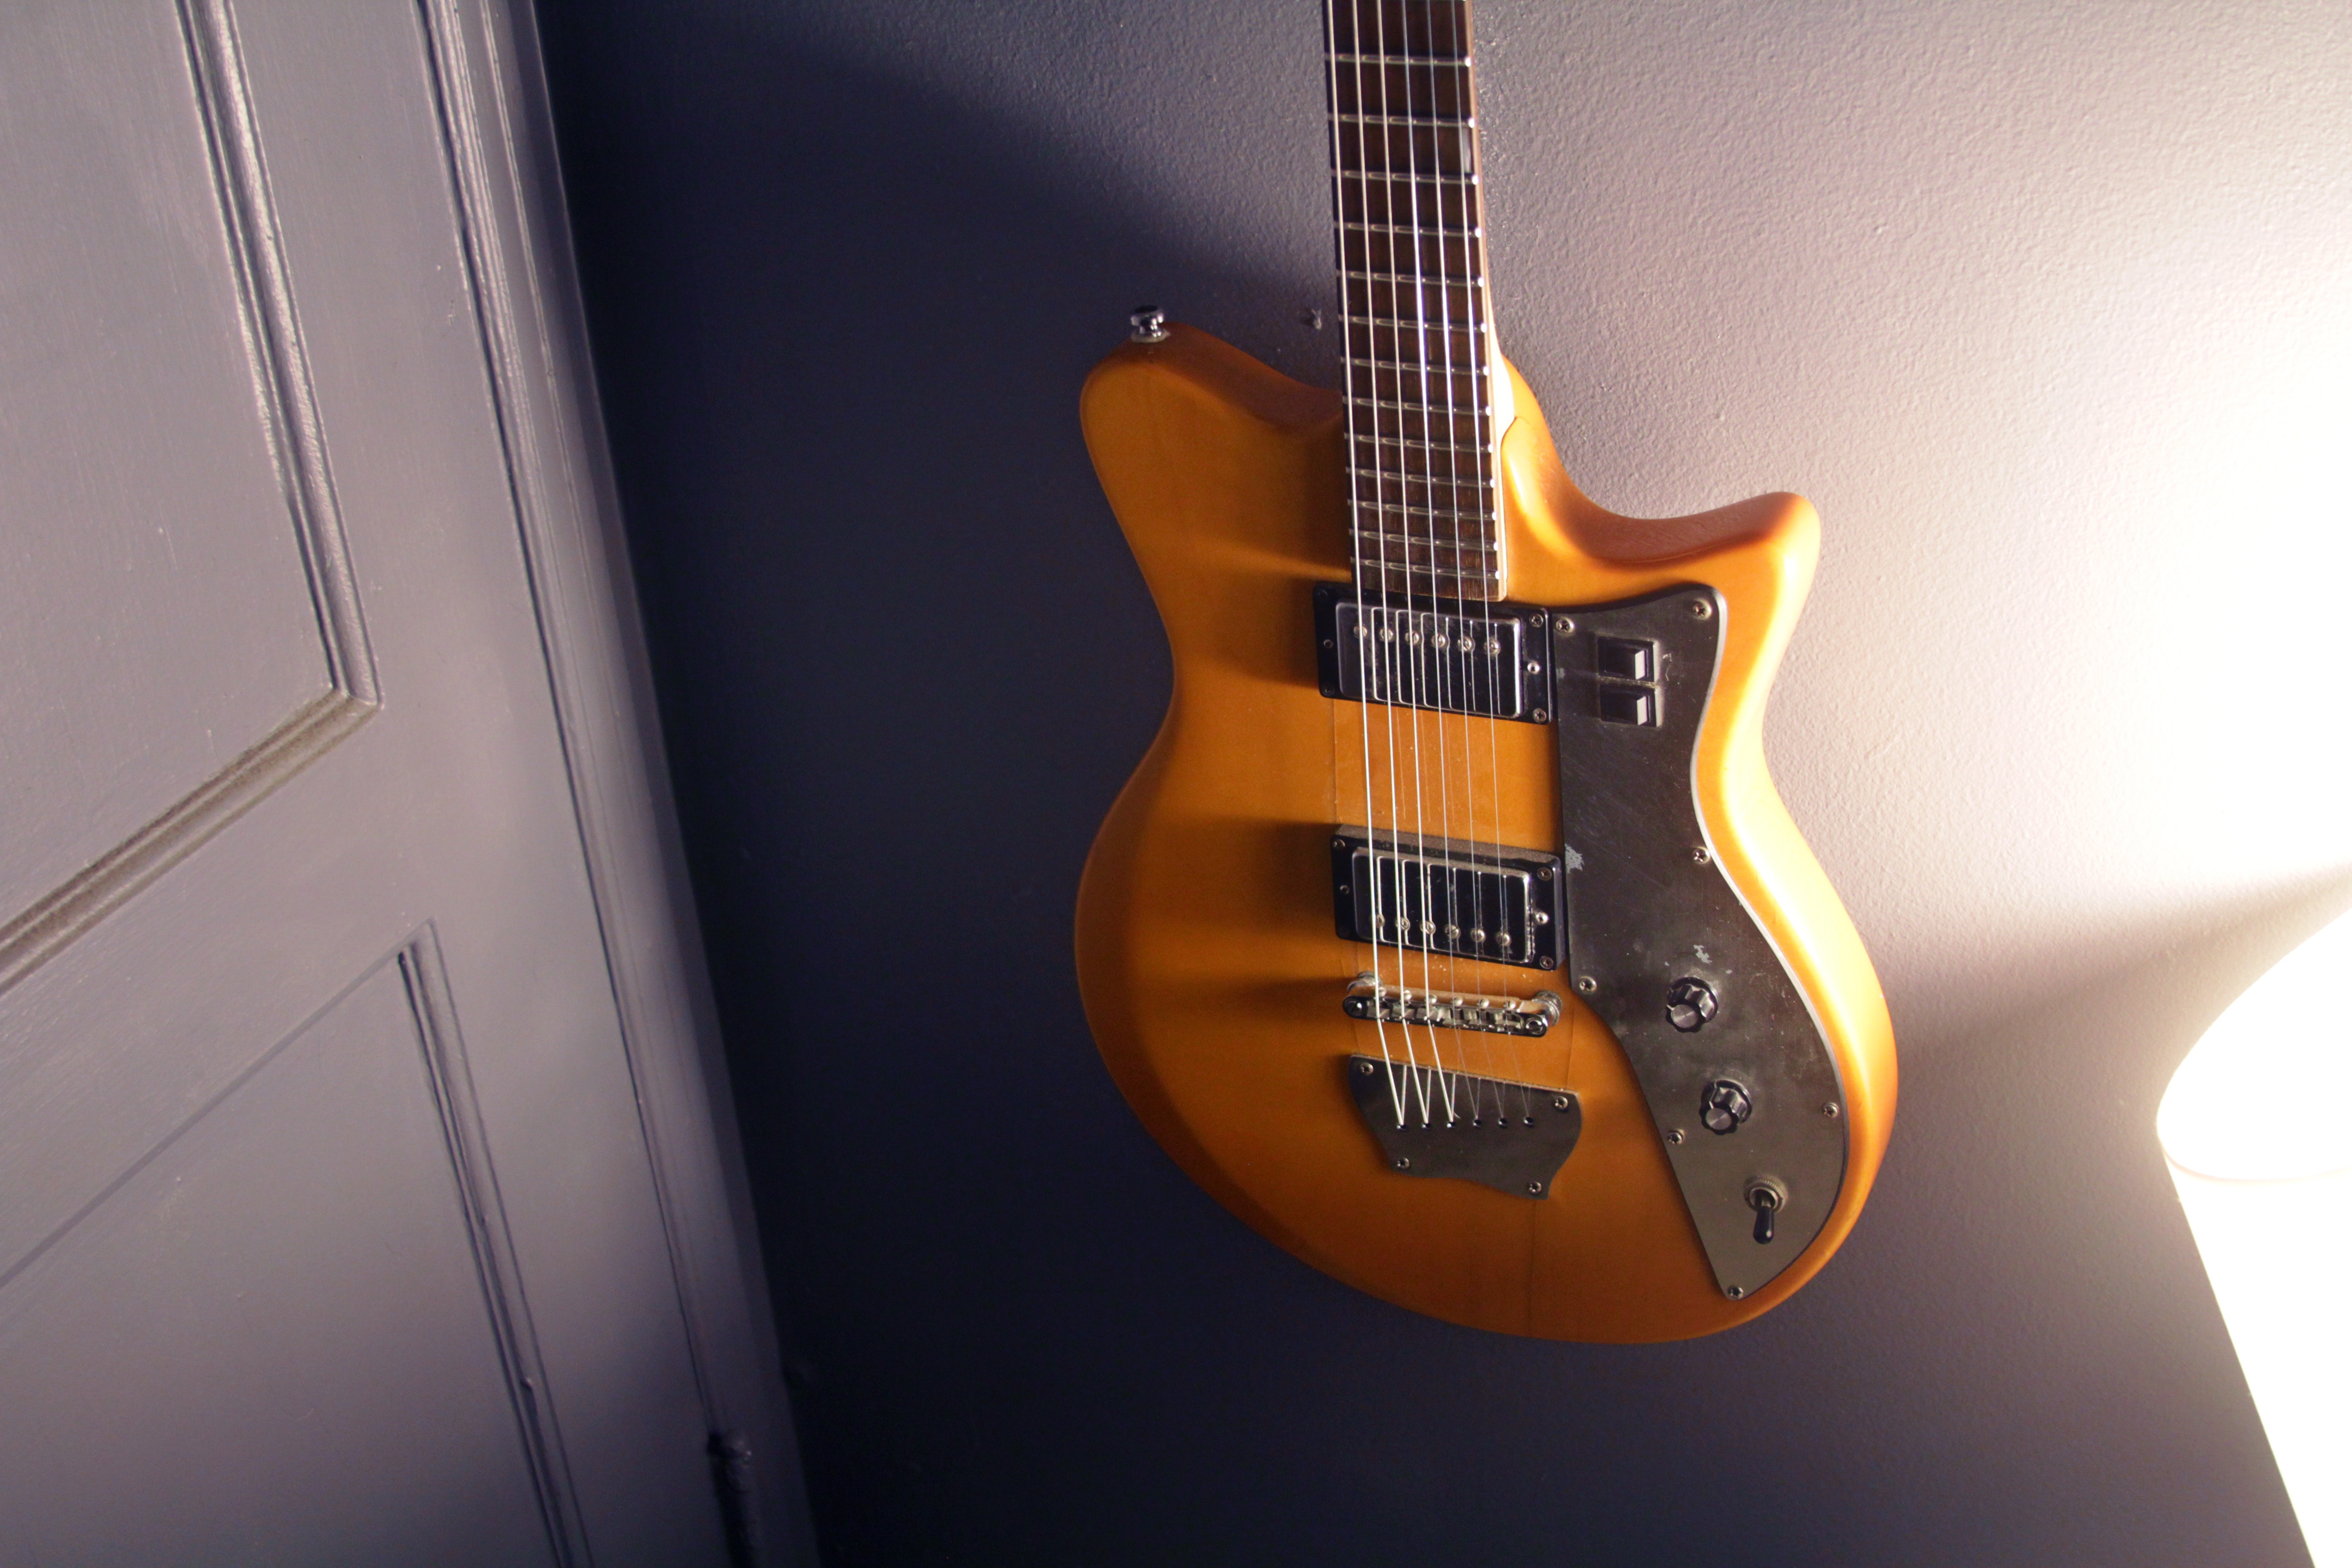 Brown and Black Electric Guitar, Door, Guitar, Hanging, Light, HQ Photo